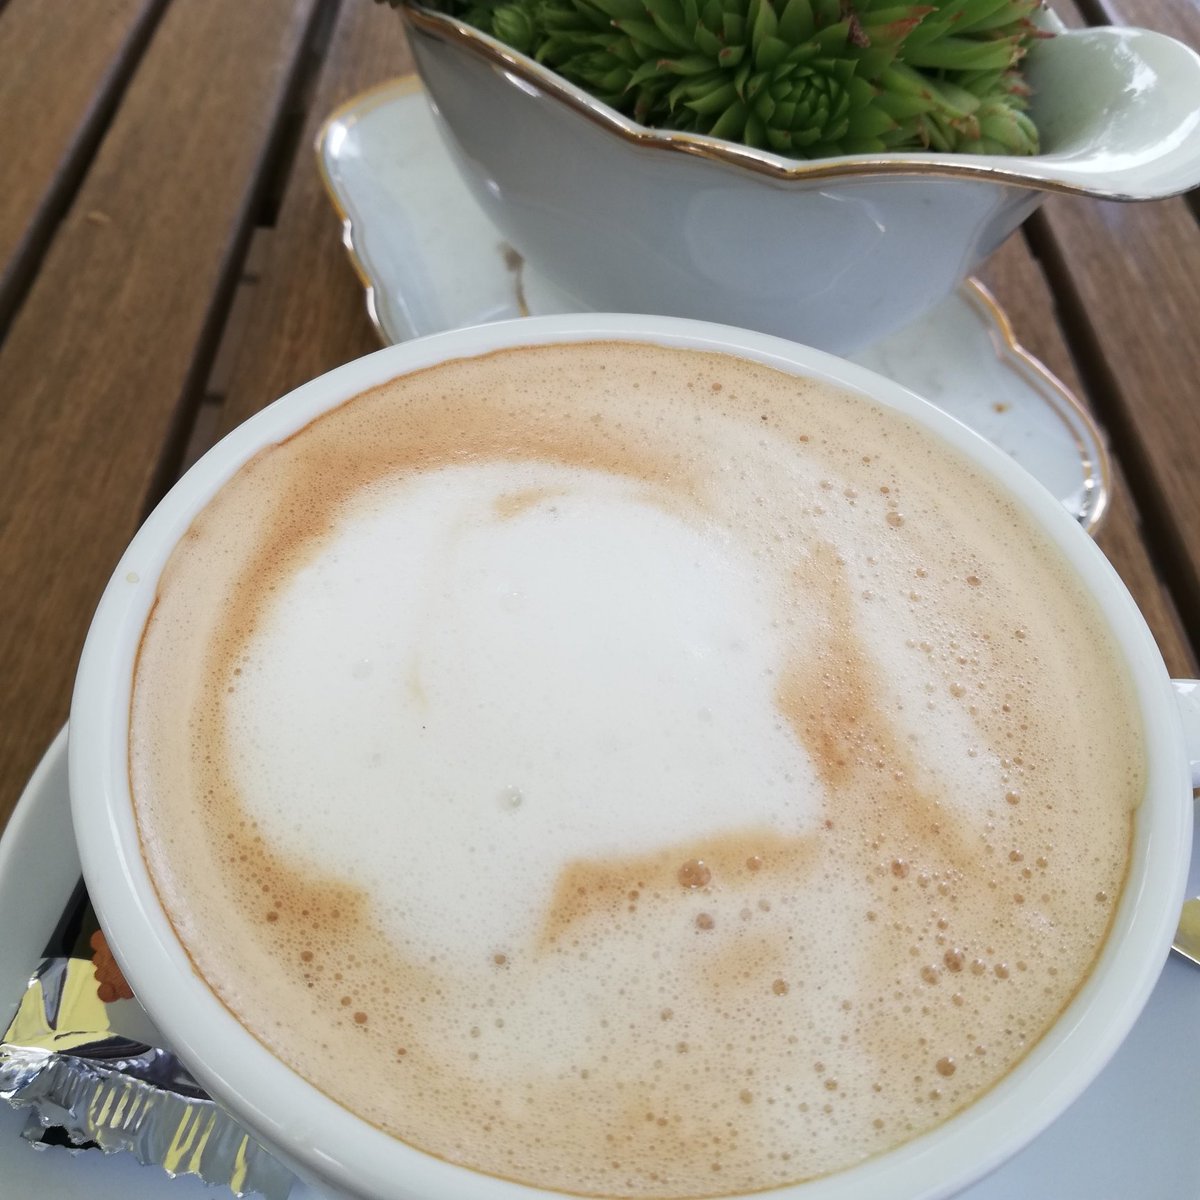 Happy sunday, friends! #firstcoffeeoftheday #coffeeandbooks #coffeelovers @JamesSaretta @LauraRueckert @kforkish @Ilanaontheroad @cazij @MarinaSofia8 @sh_ewa @claire_ohl @xLontrax @lorrainekasyan @bencrothers @LindaKSienkwicz